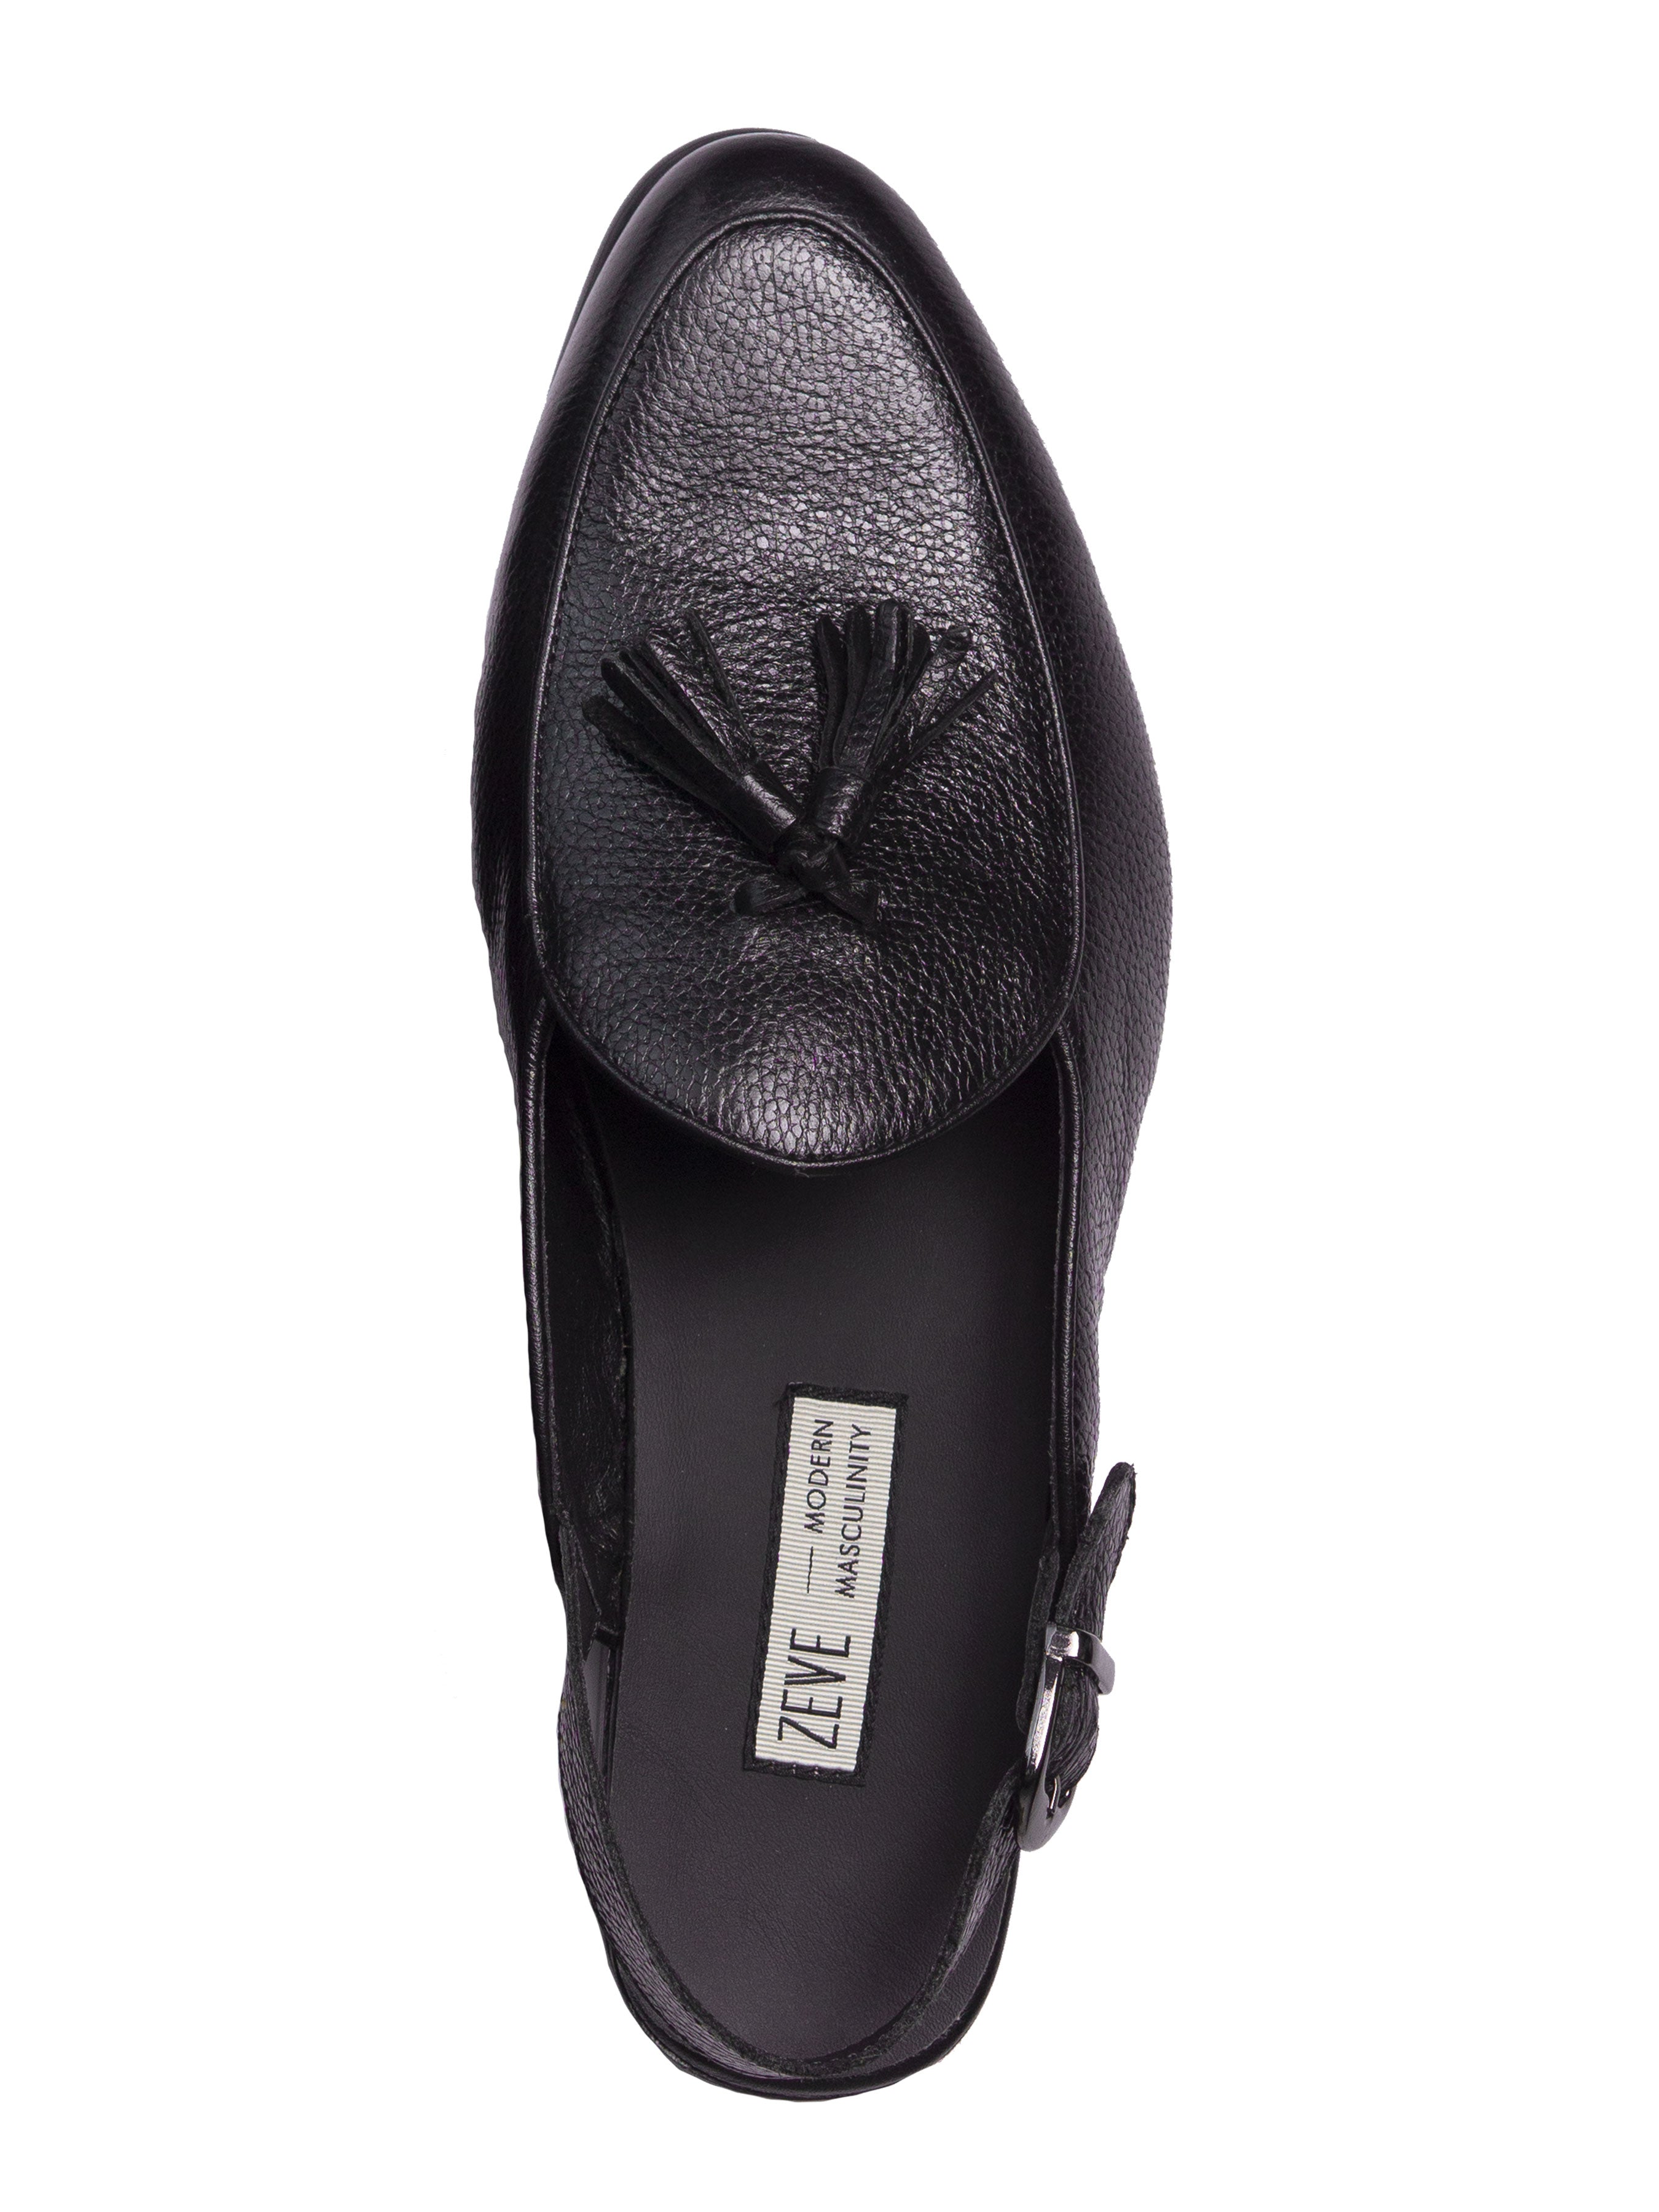 Mules Belgian Tassel Slingback Strap - Black Pebble Grain Leather - Zeve Shoes